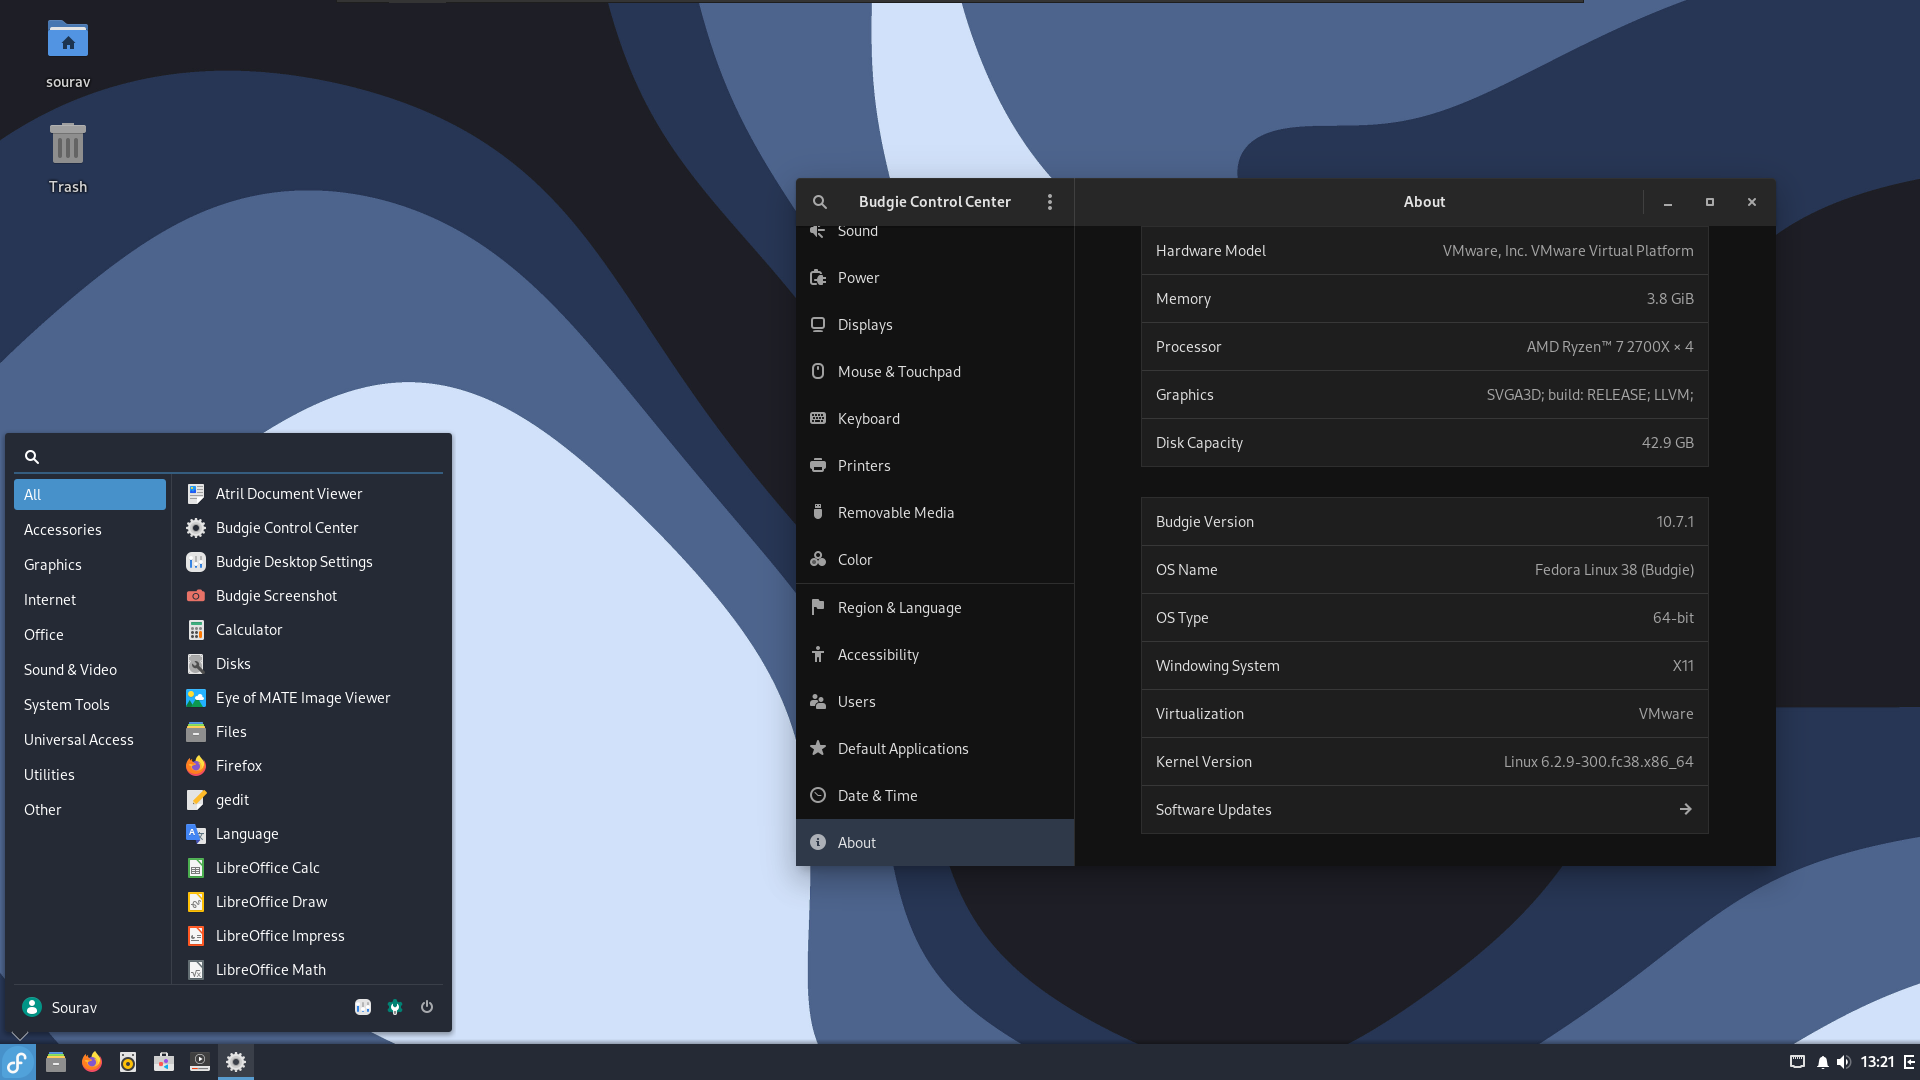 a screenshot of the desktop of fedora budgie spin